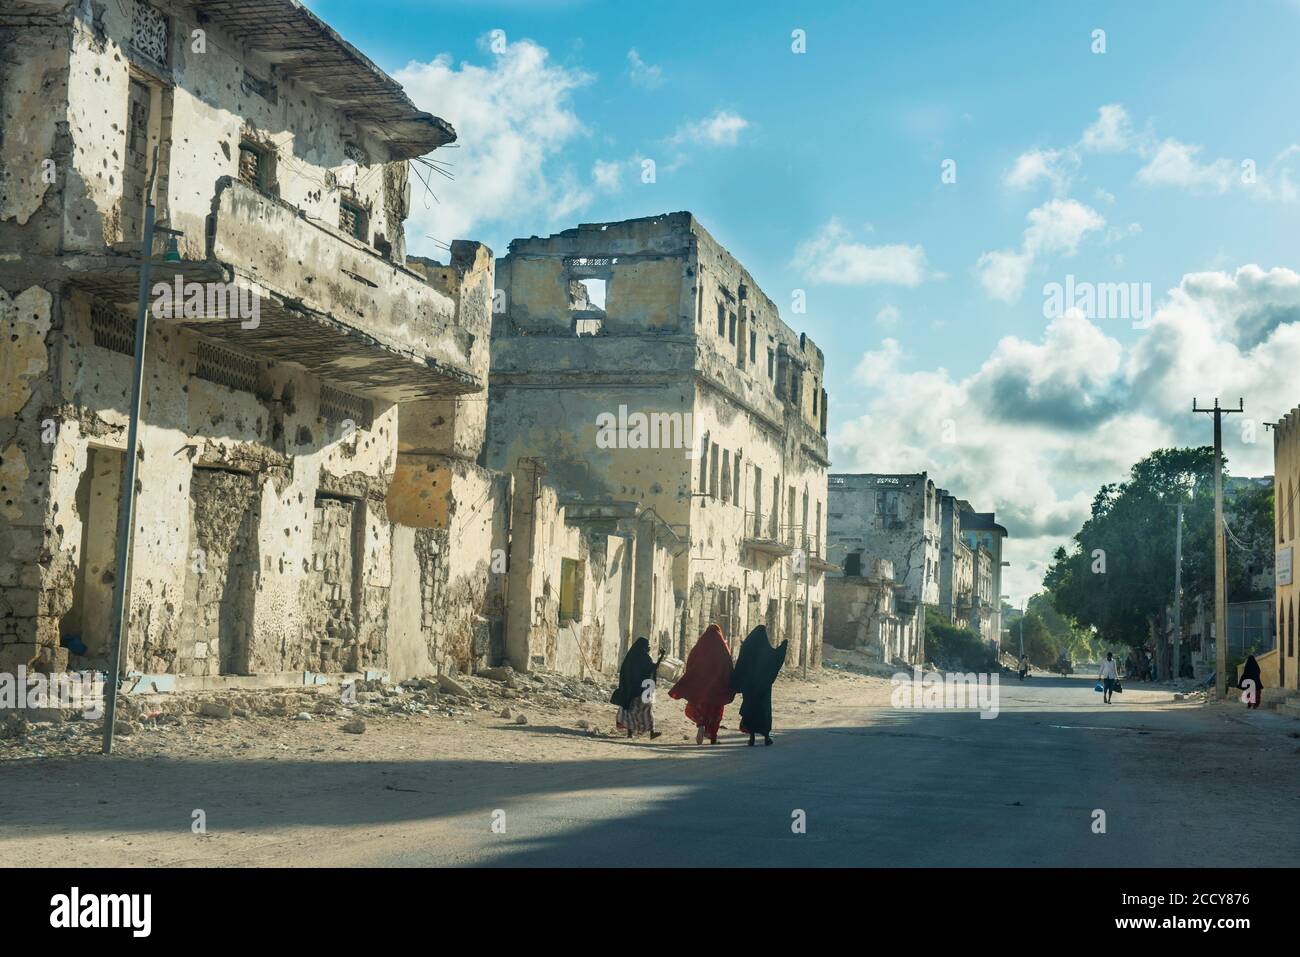 Somali women walking through the streets of the destroyed houses of Mogadishu, Somalia Stock Photo